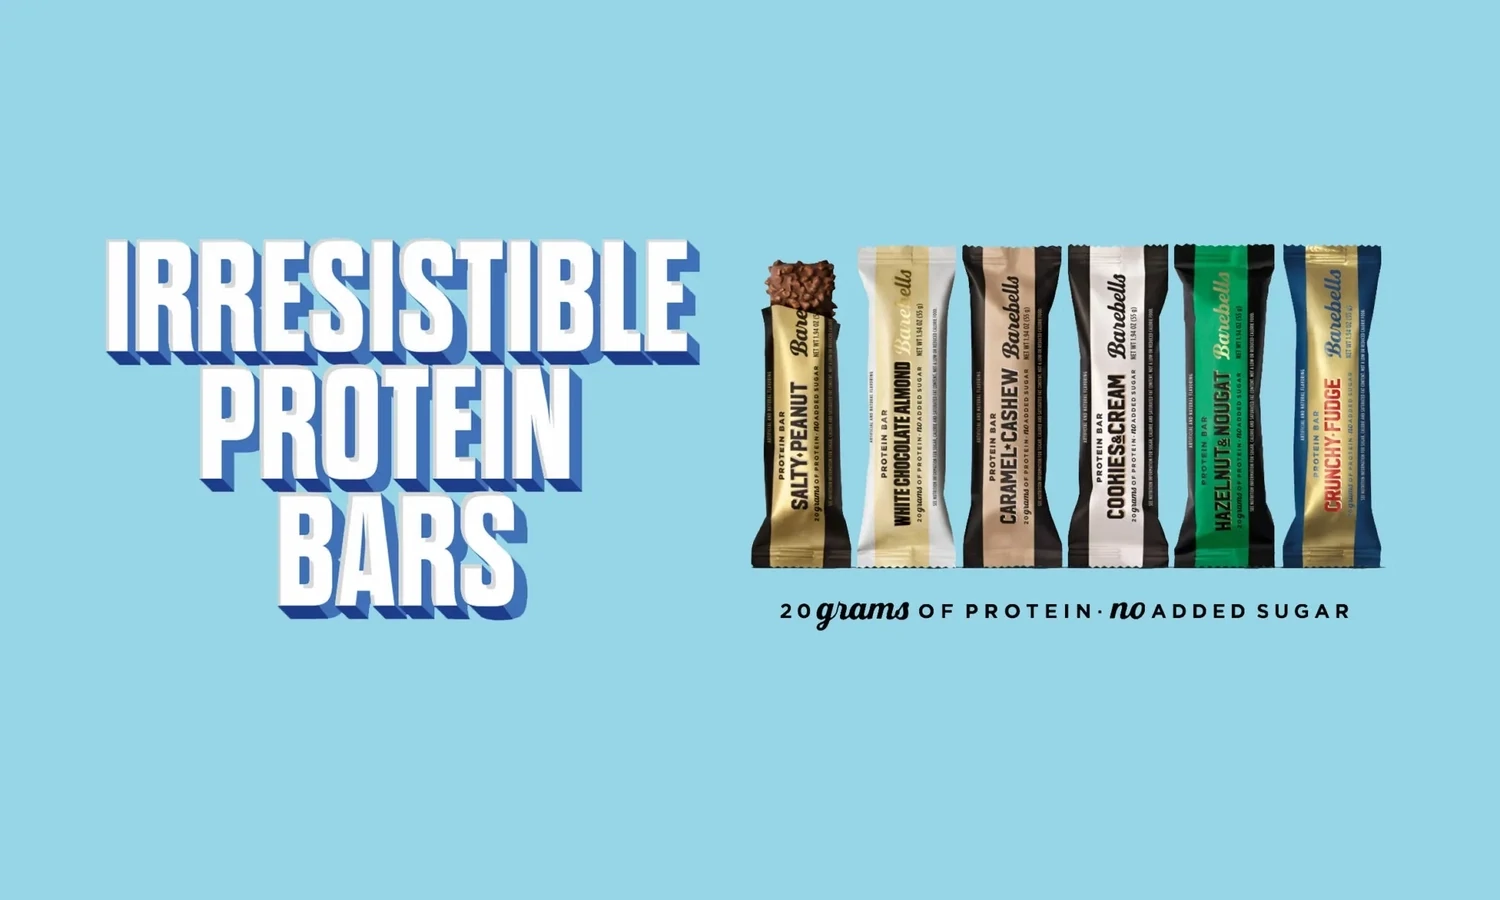 Barebells Protein Bars